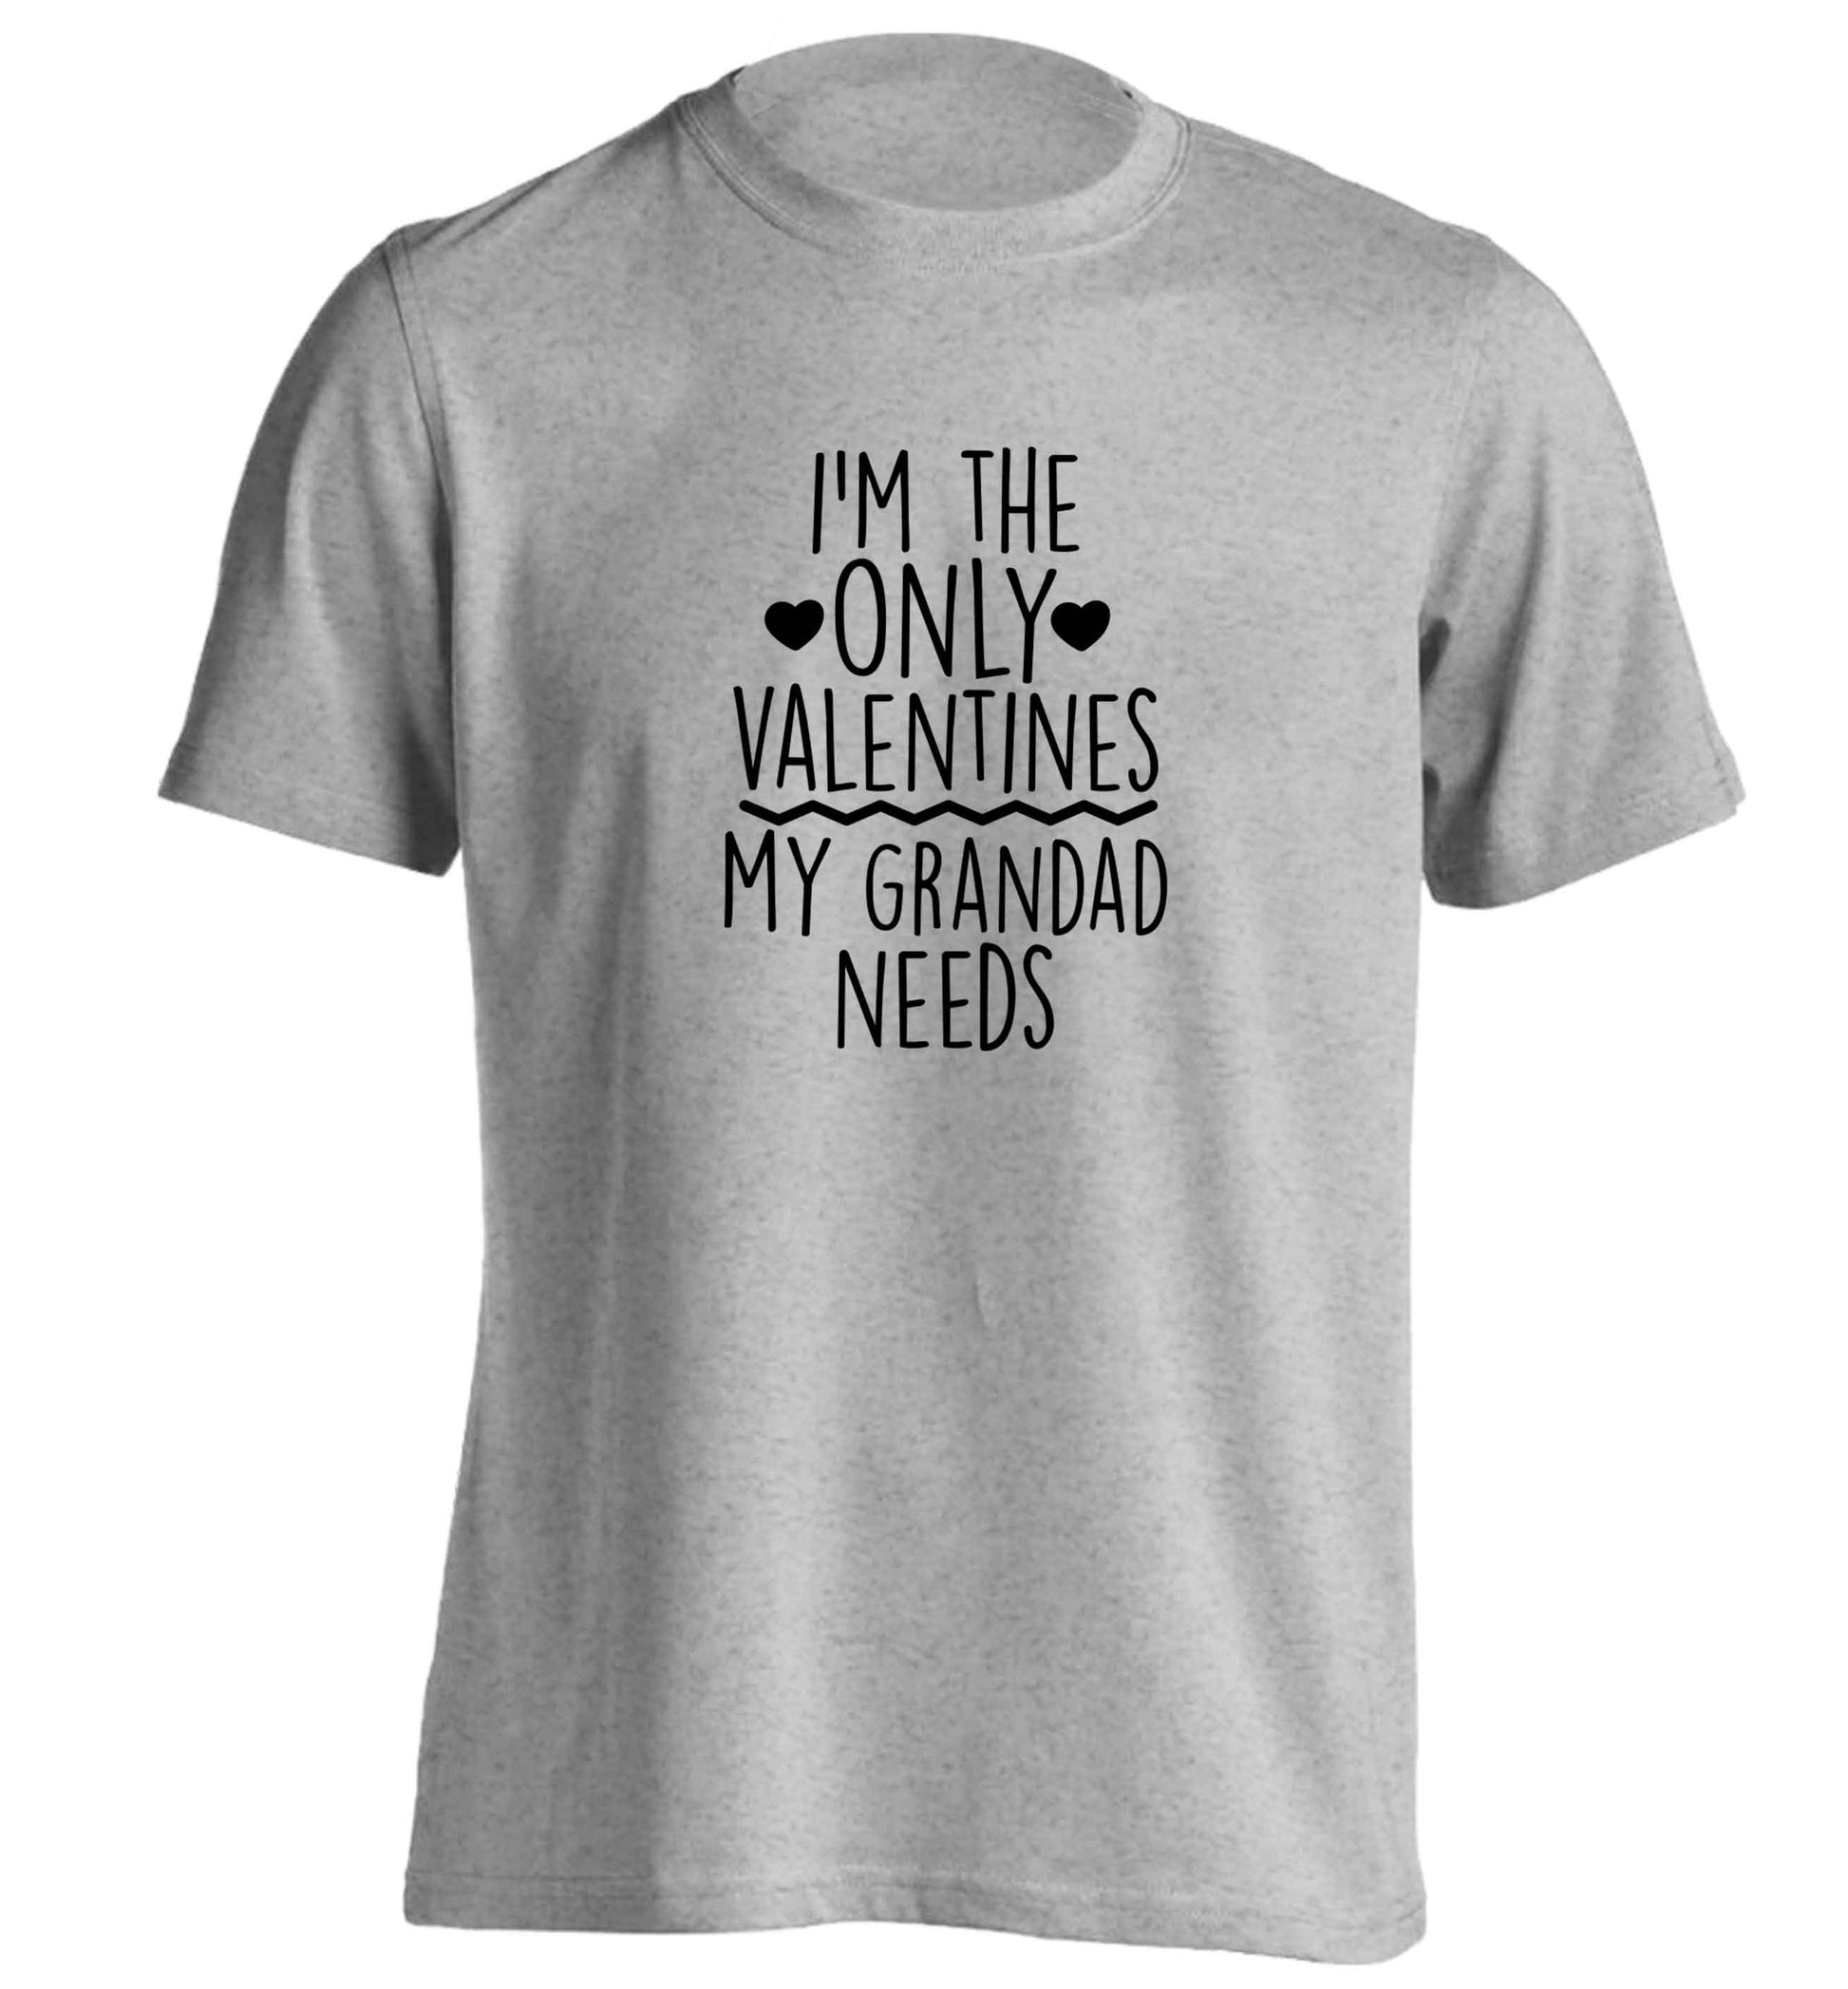 I'm the only valentines my grandad needs adults unisex grey Tshirt 2XL